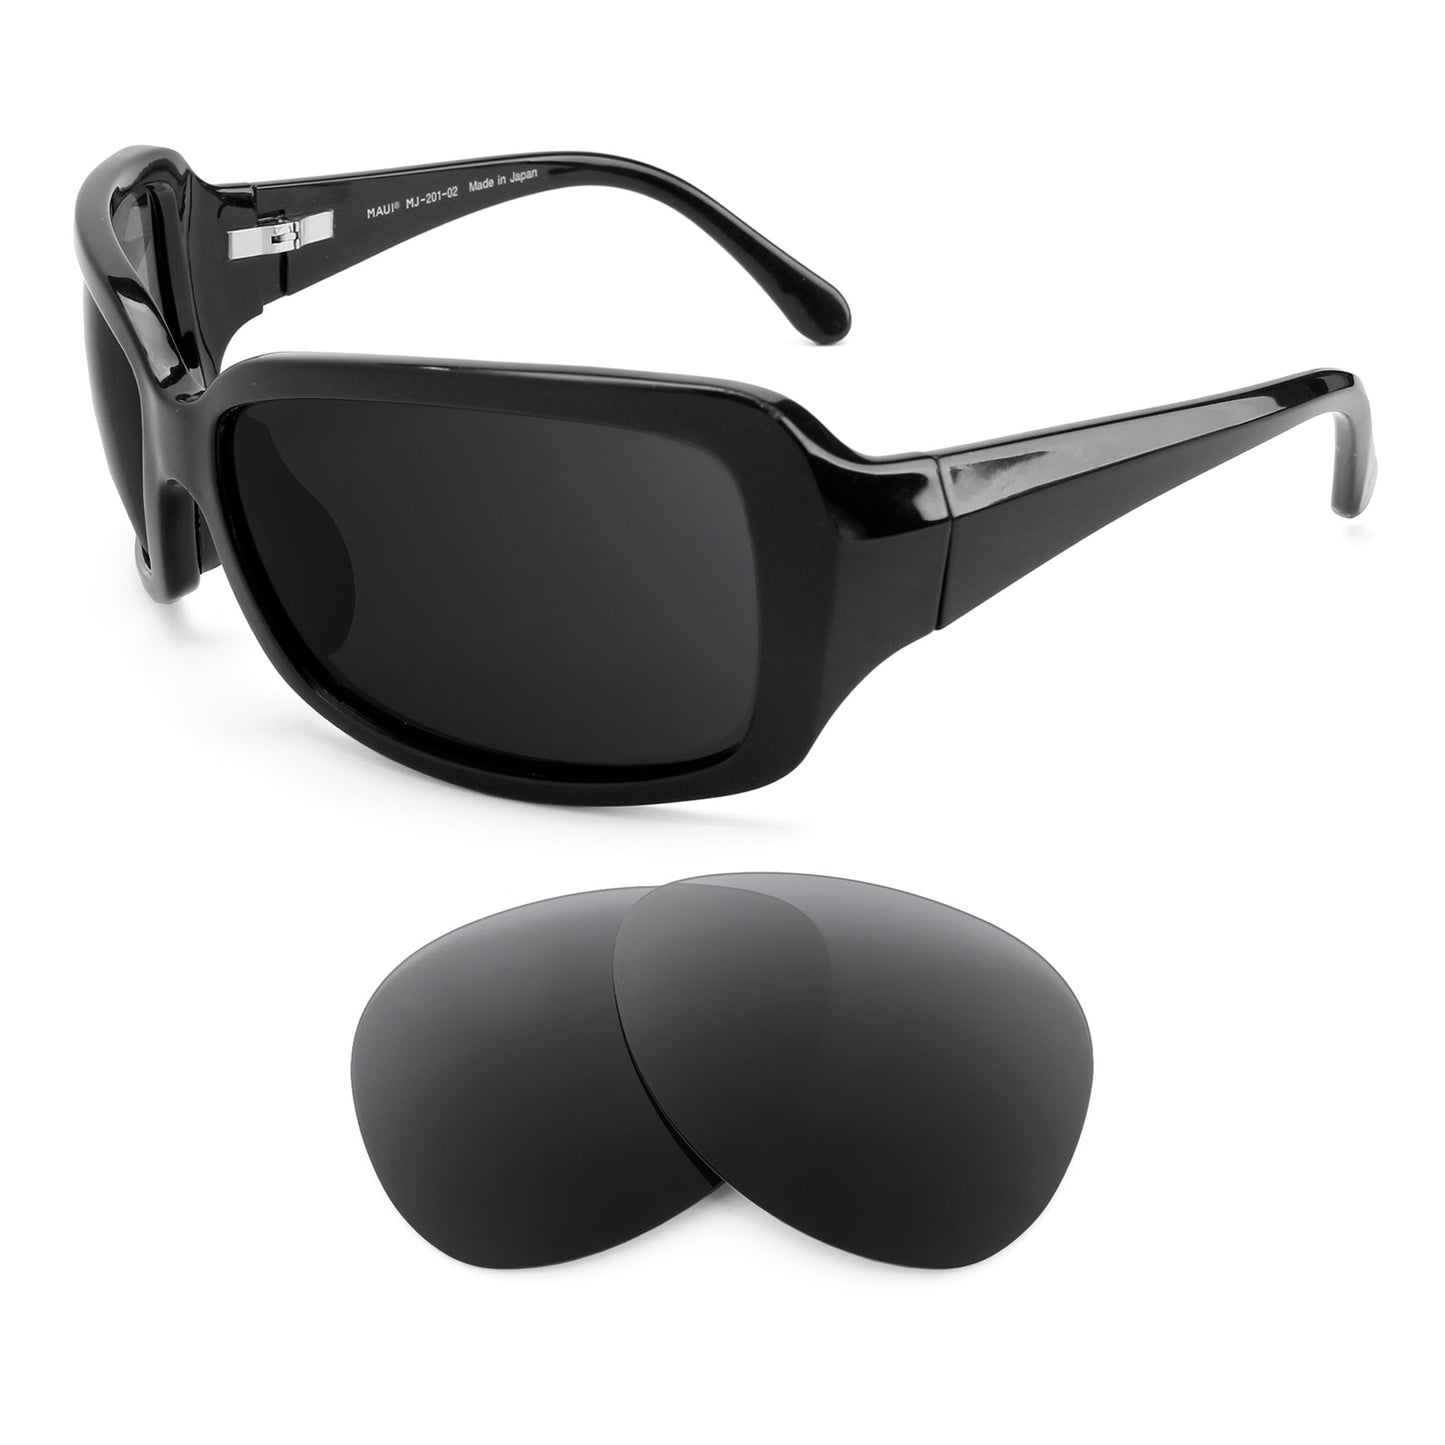 Maui Jim Kai MJ201 sunglasses with replacement lenses